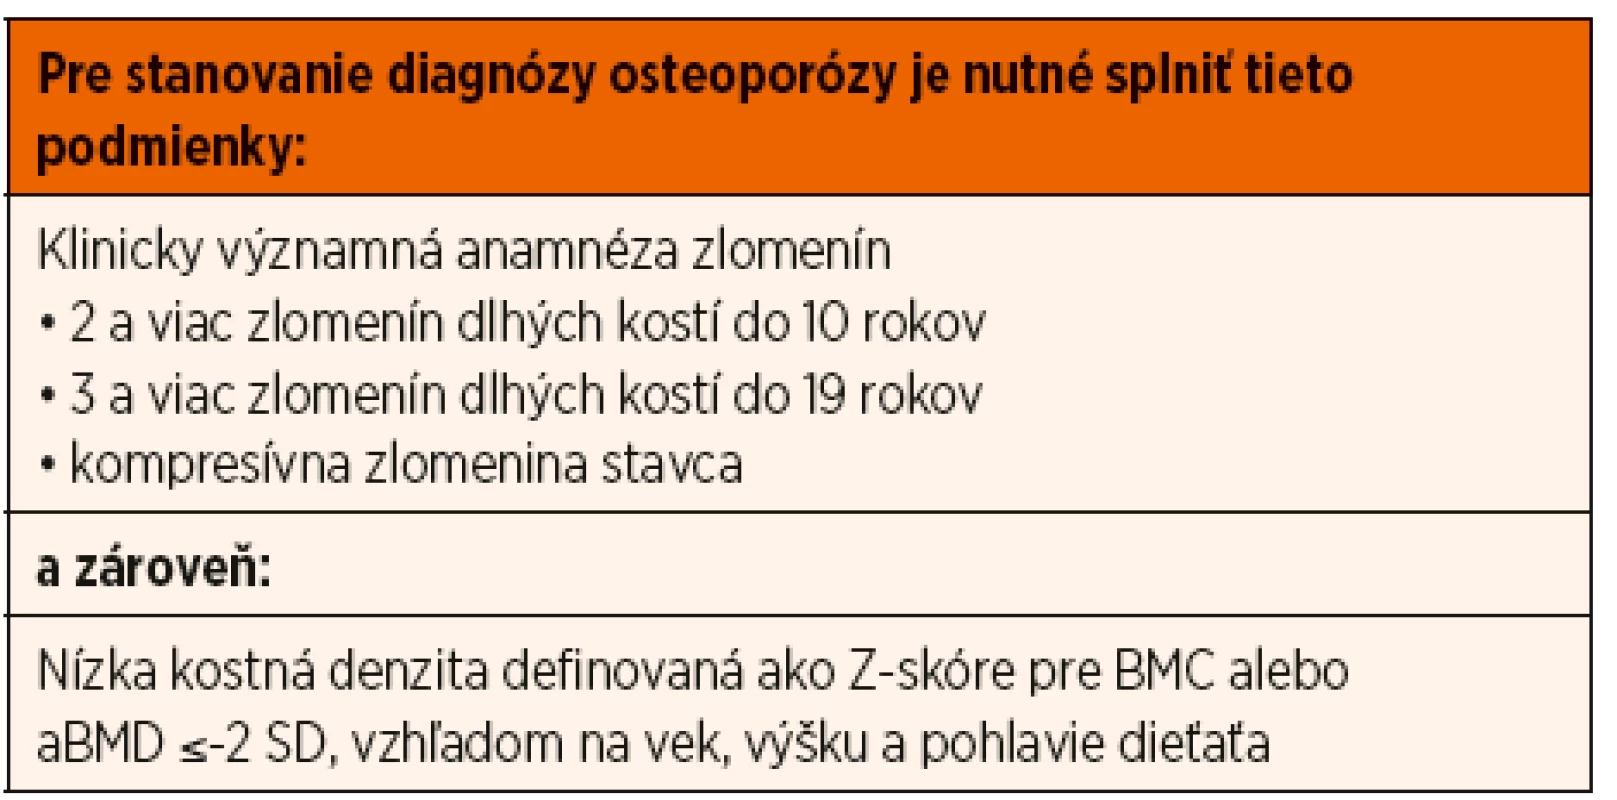 Diagnostické kritéria osteoporózy u detí a adolescentov
(na základe Official Pediatric Positions of the ISCD, 2013).